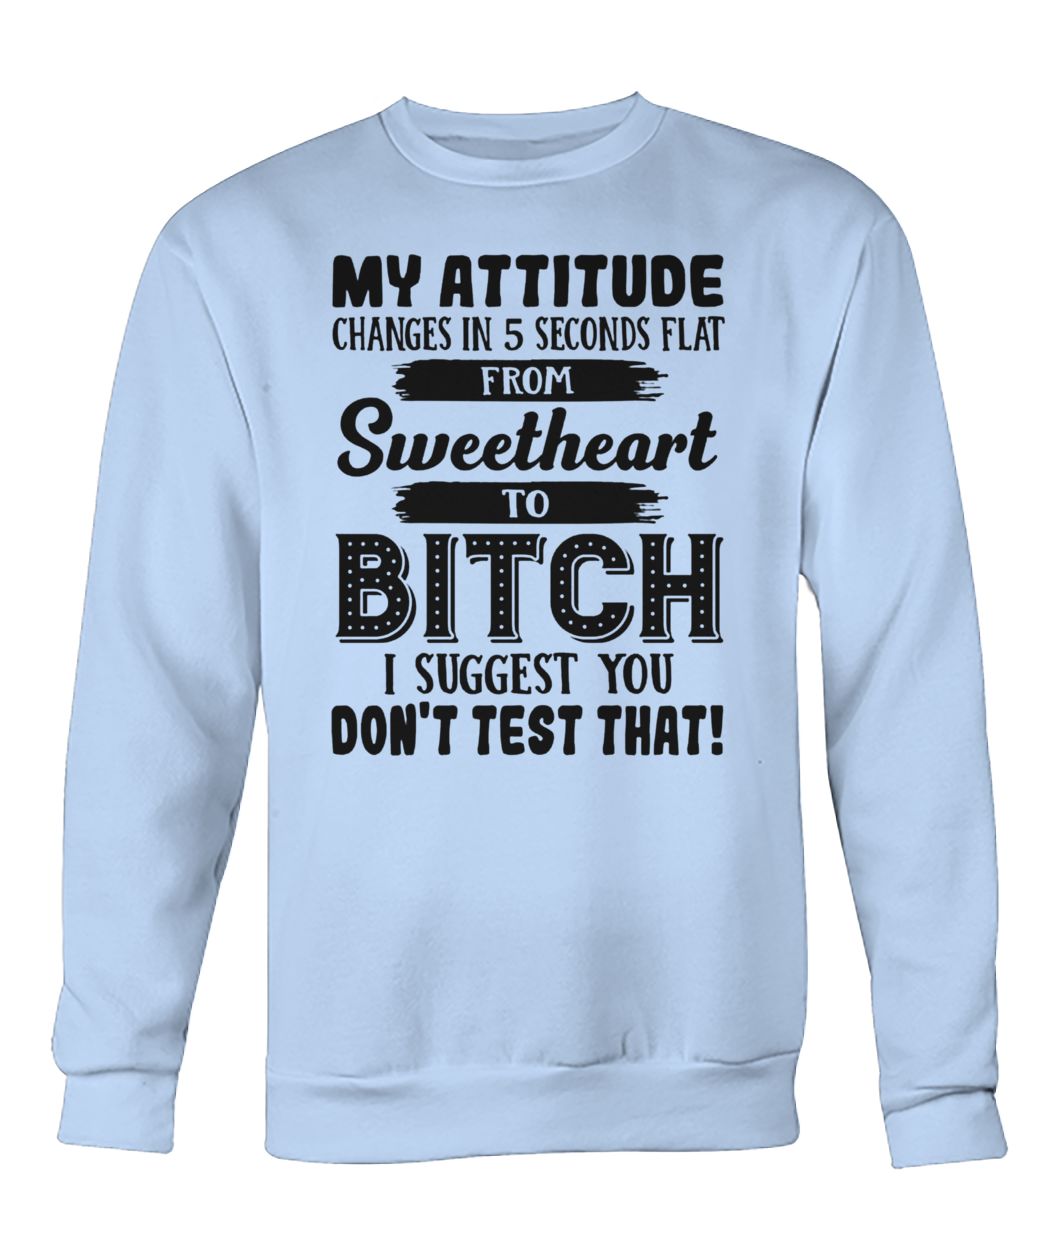 My attitude changes in 5 seconds flat from sweetheart crew neck sweatshirt